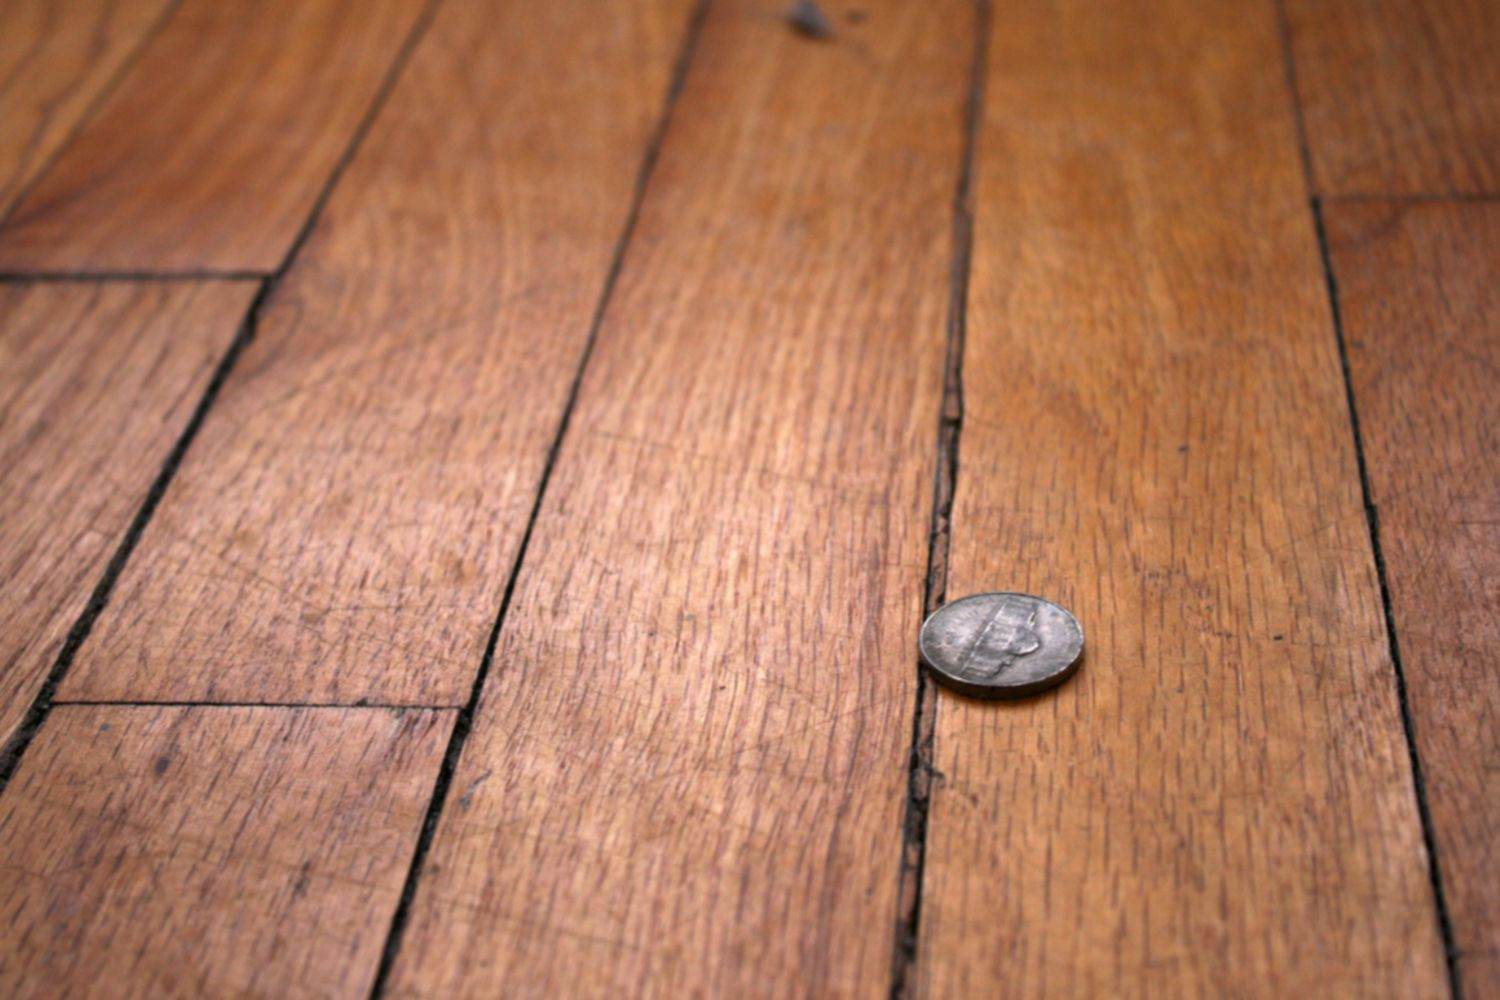 Filling Holes In Hardwood Floors Of How to Repair Gaps Between Floorboards In Wood Floor with Gaps Between Boards 1500 X 1000 56a49eb25f9b58b7d0d7df8d